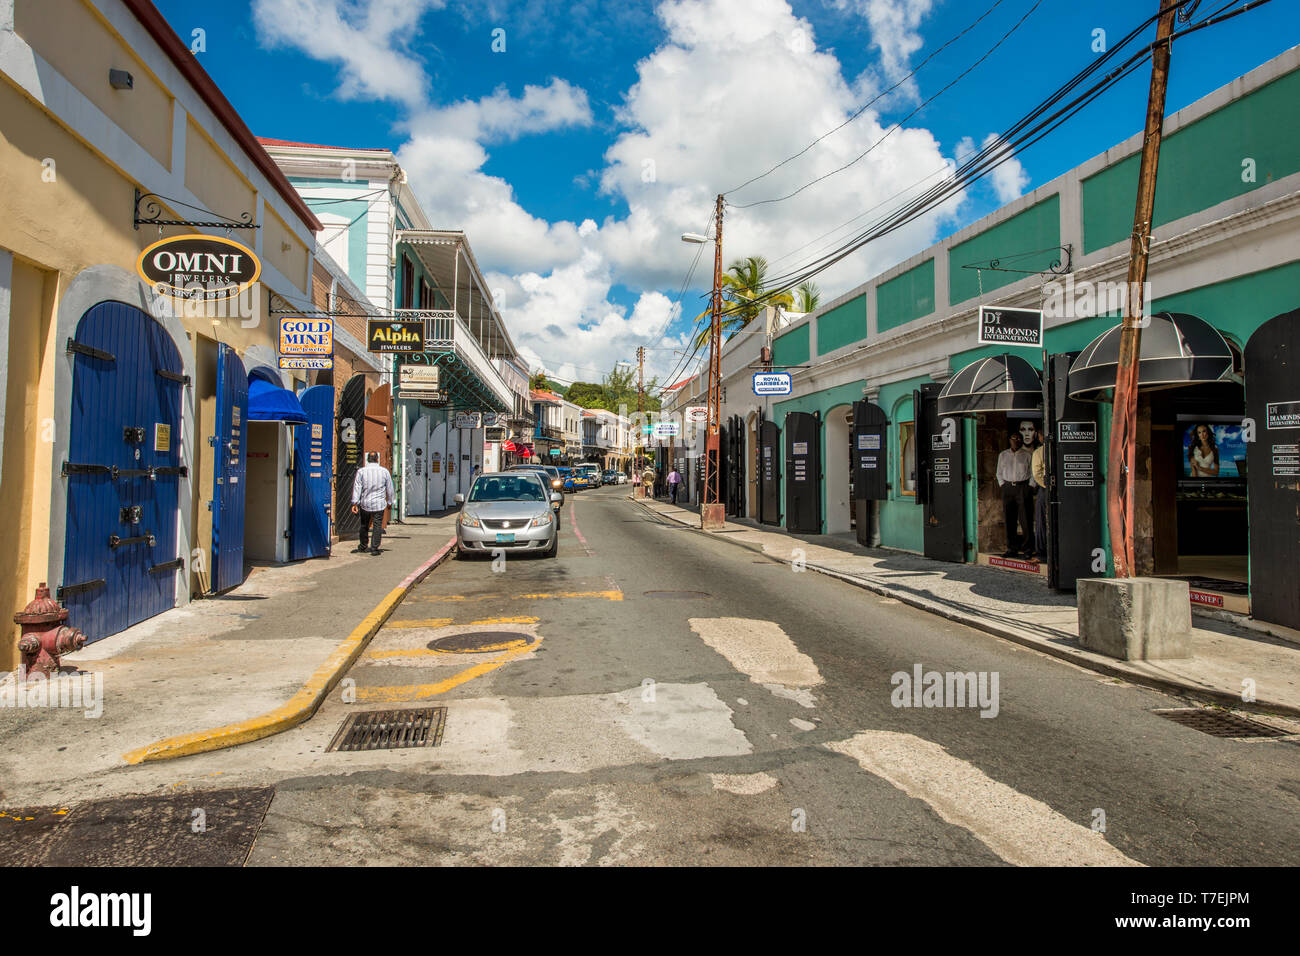 Shopping district downtown Charlotte Amalie, St. Thomas, US Virgin Islands. Stock Photo